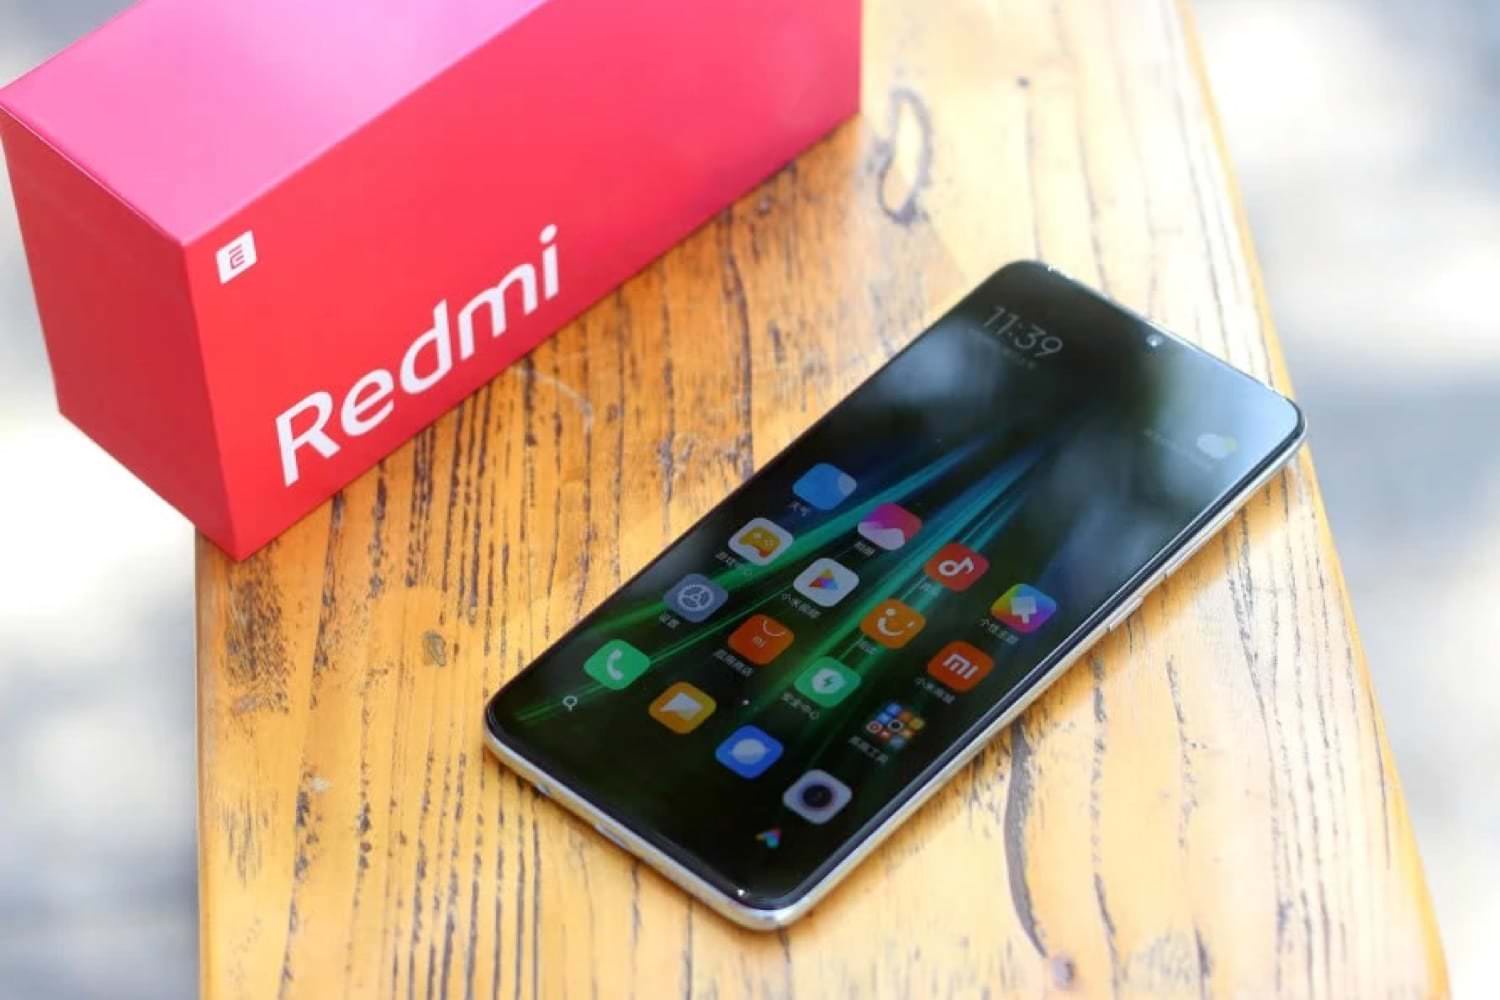 Xiaomi Redmi 8 64 Гб Купить